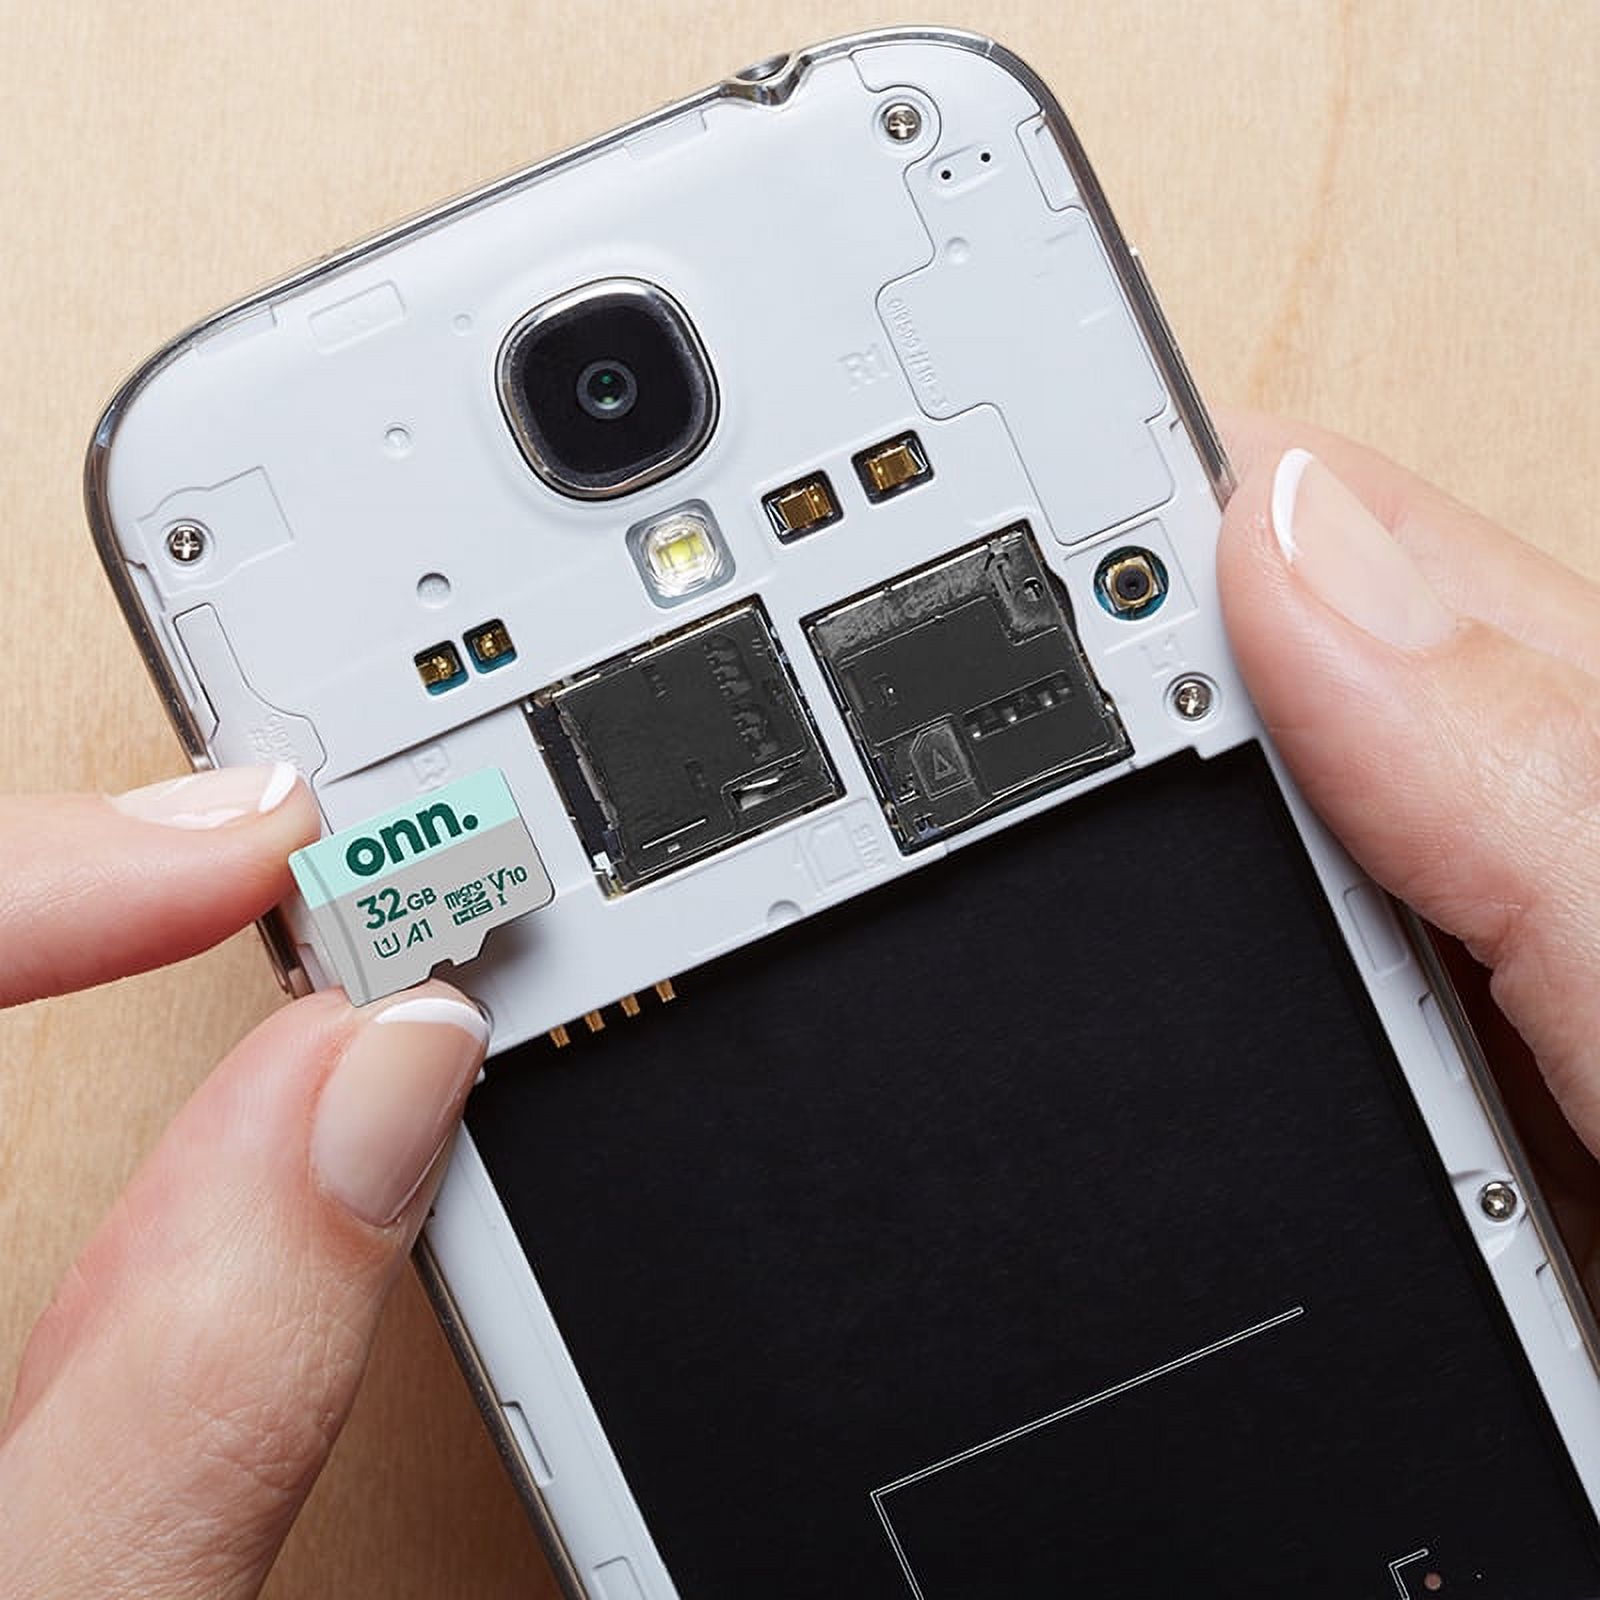 onn. 32GB Class 10 U1 MicroSDHC Flash Memory Card - image 4 of 6